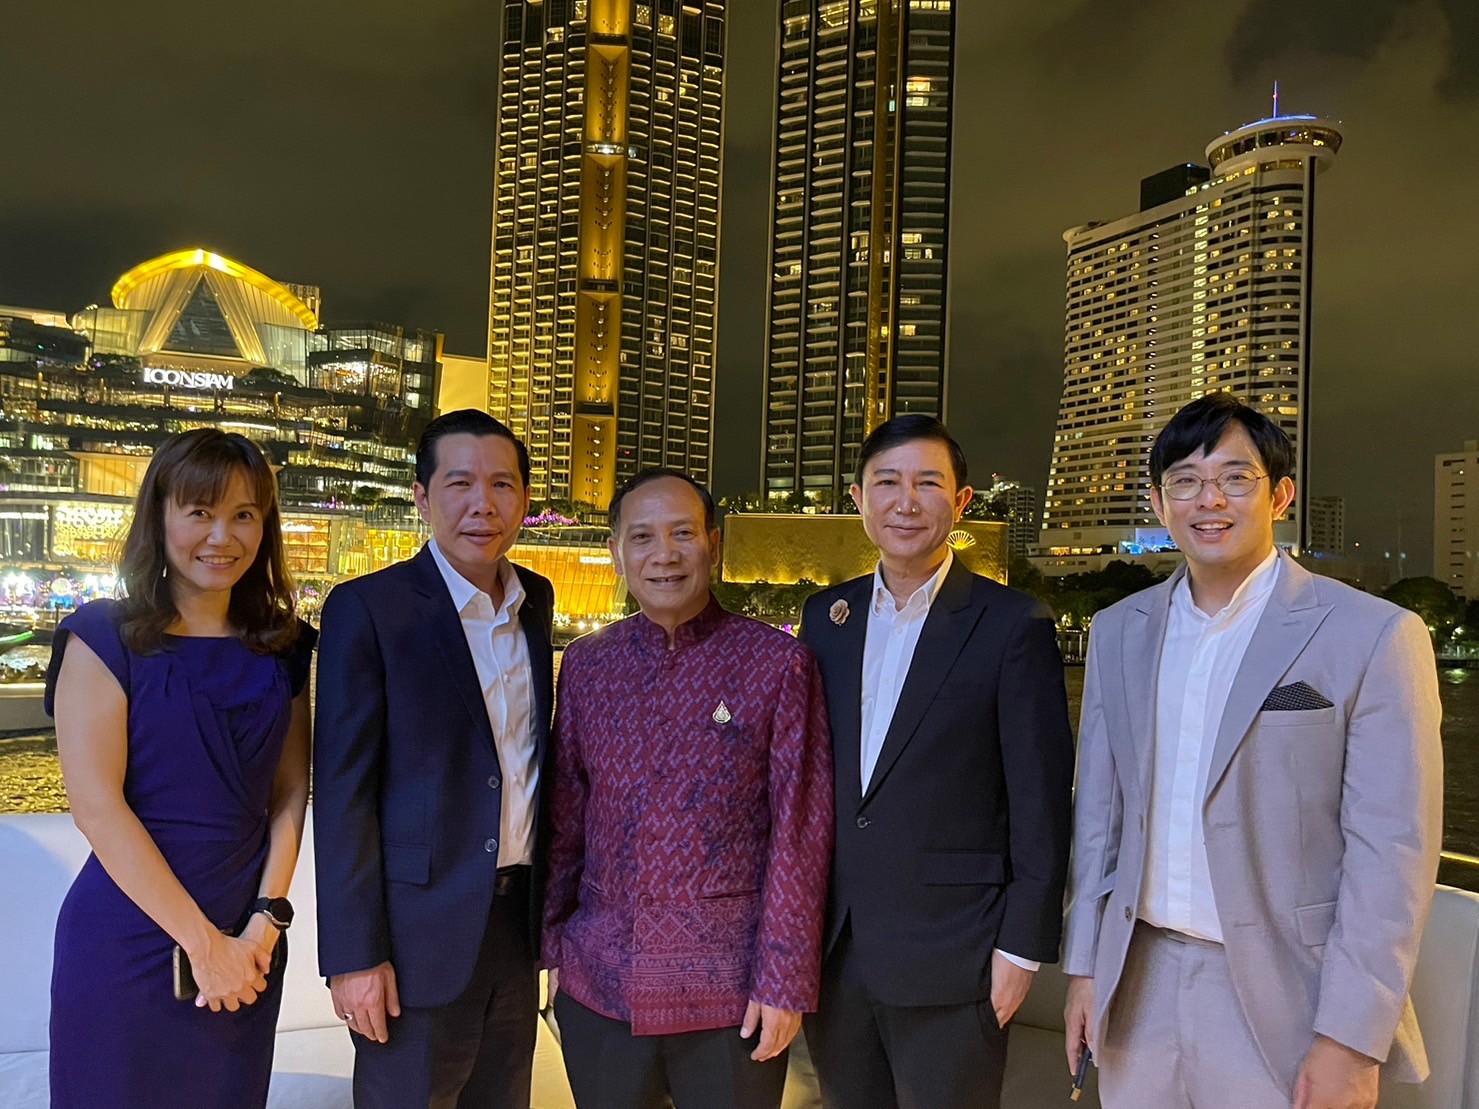 ThailandCONNEX แพลตฟอร์มท่องเที่ยวแห่งชาติ เข้าร่วมงาน DIGITAL INFINITY Networking Night รุกขยายเครือข่ายความร่วมมือกับหลากหลายหน่วยงานภาครัฐ และเอกชน เร่งพลิกฟื้นอุตสาหกรรมท่องเที่ยวไทยด้วยดิจิทัลเทคโนโลยี